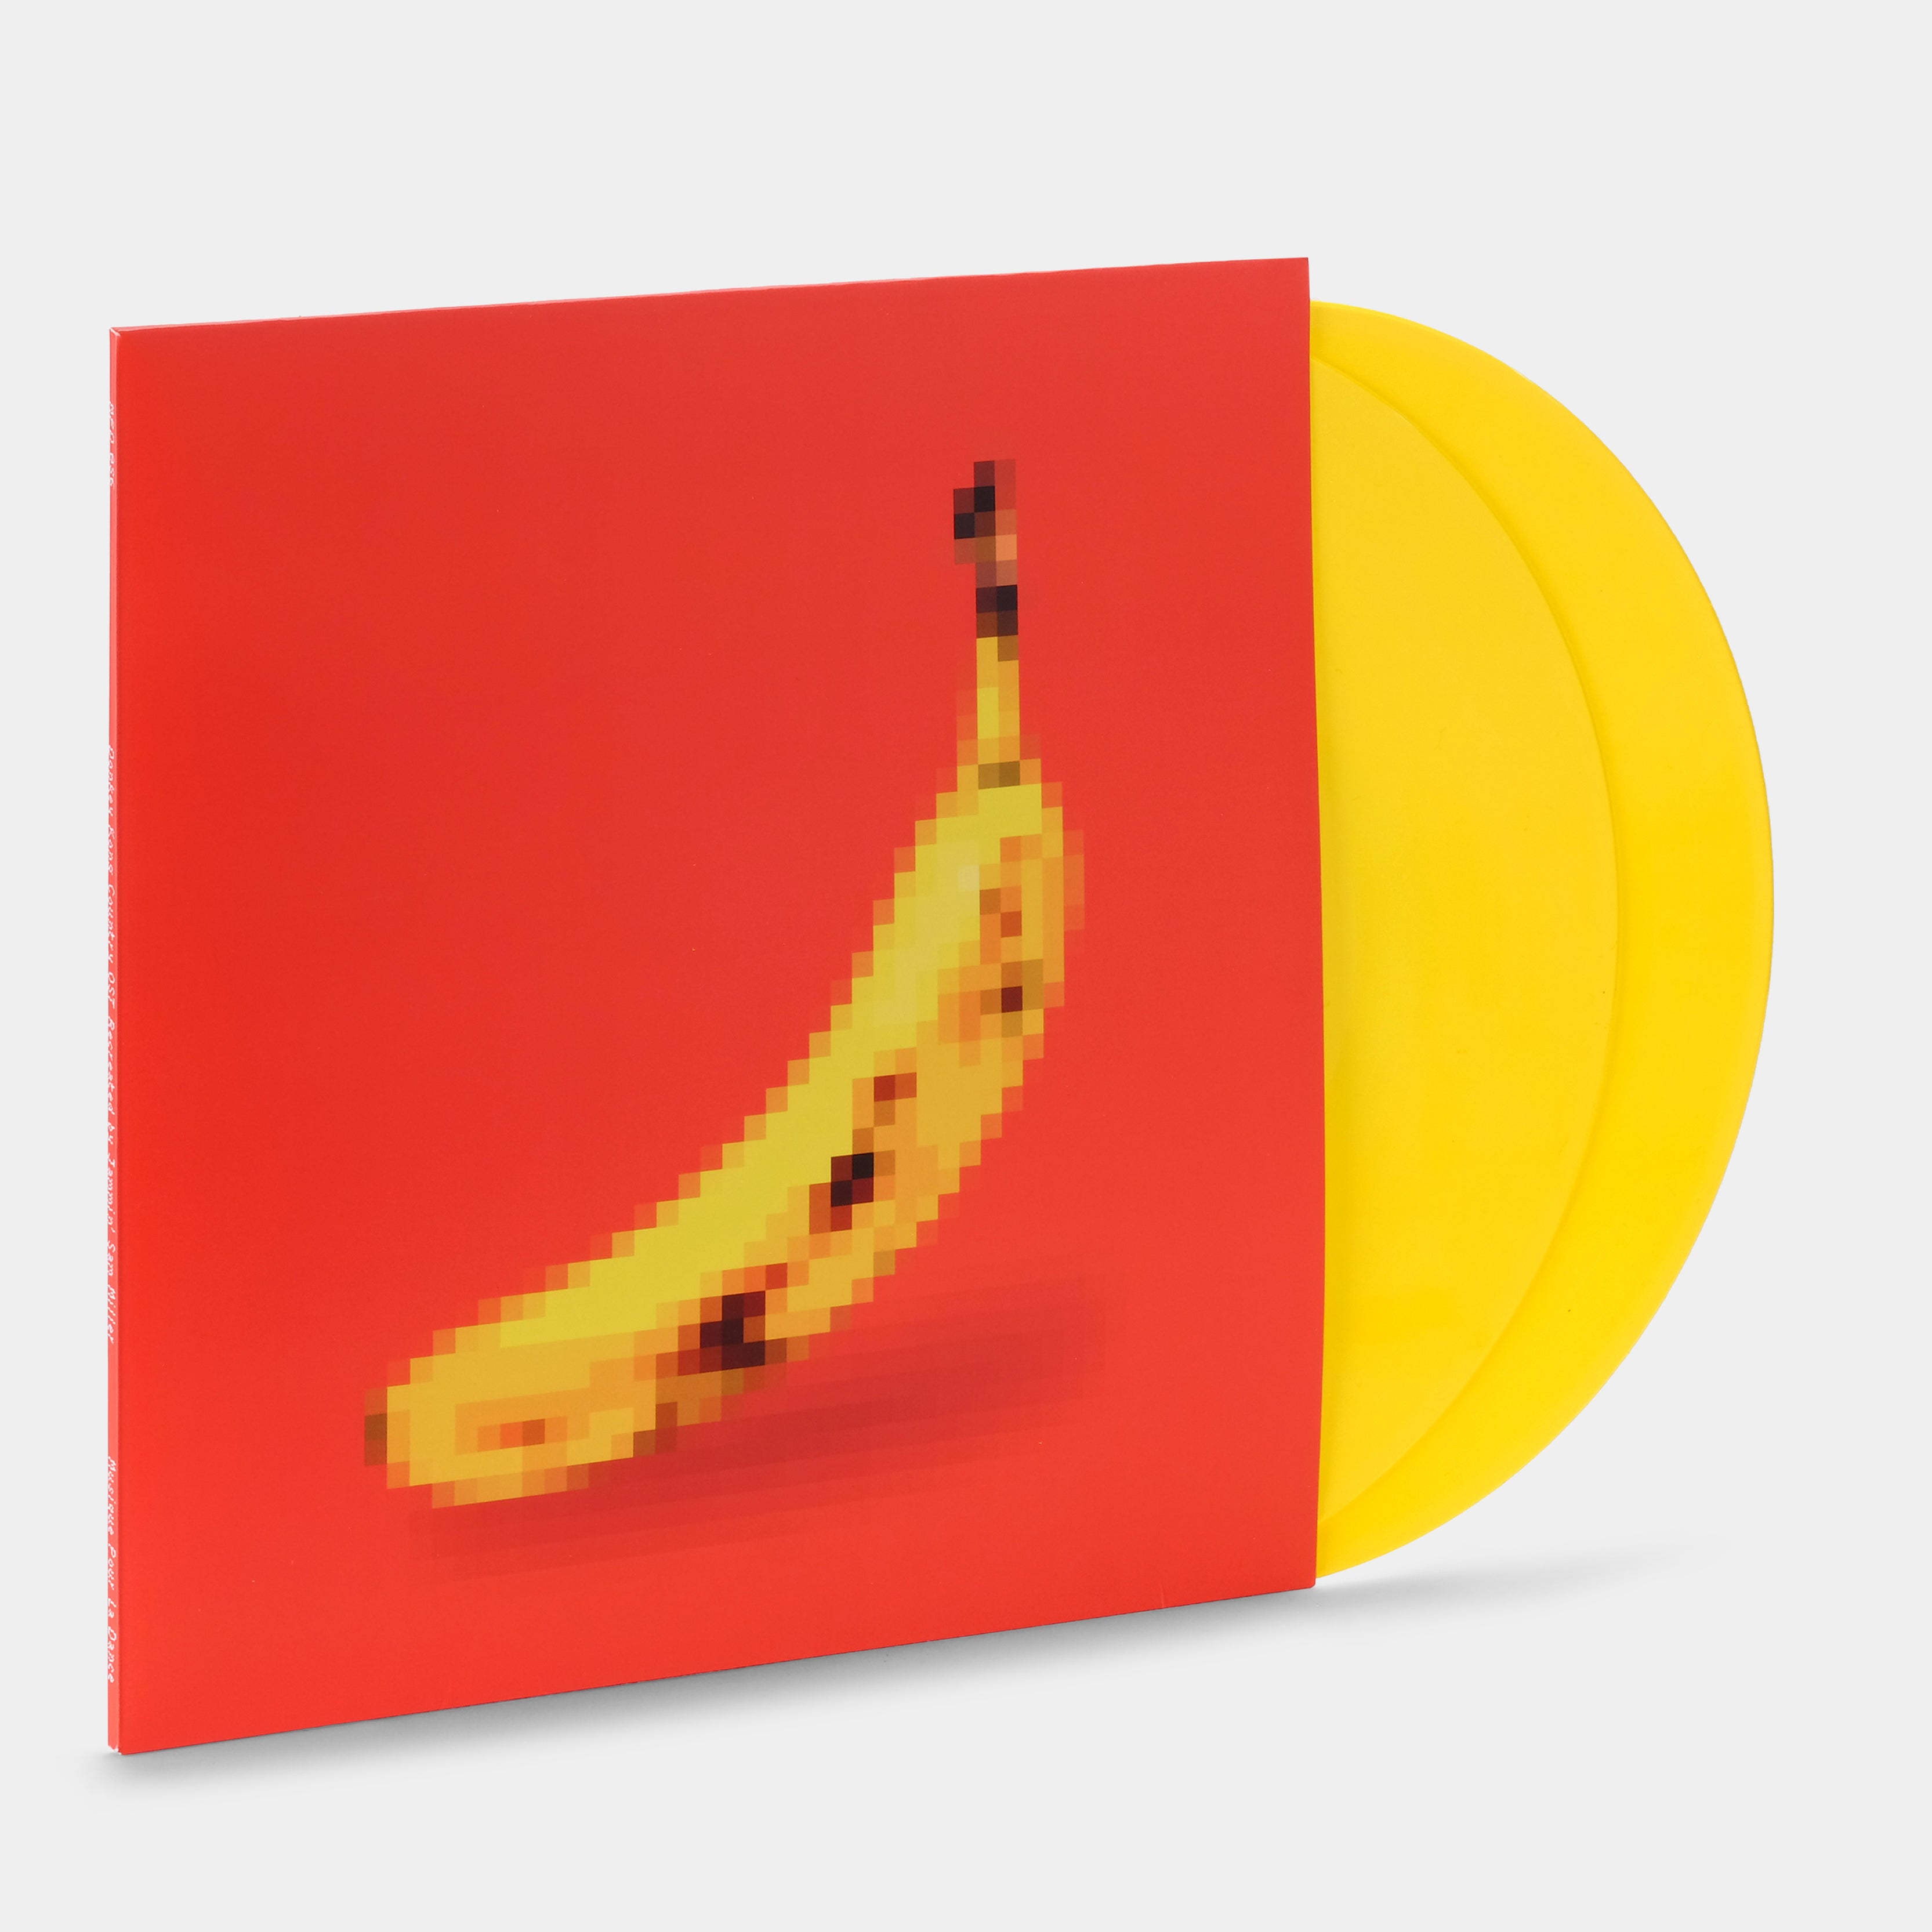 Jammin' Sam Miller – Donkey Kong Country (OST Recreated) 2xLP Banana Yellow Vinyl Record